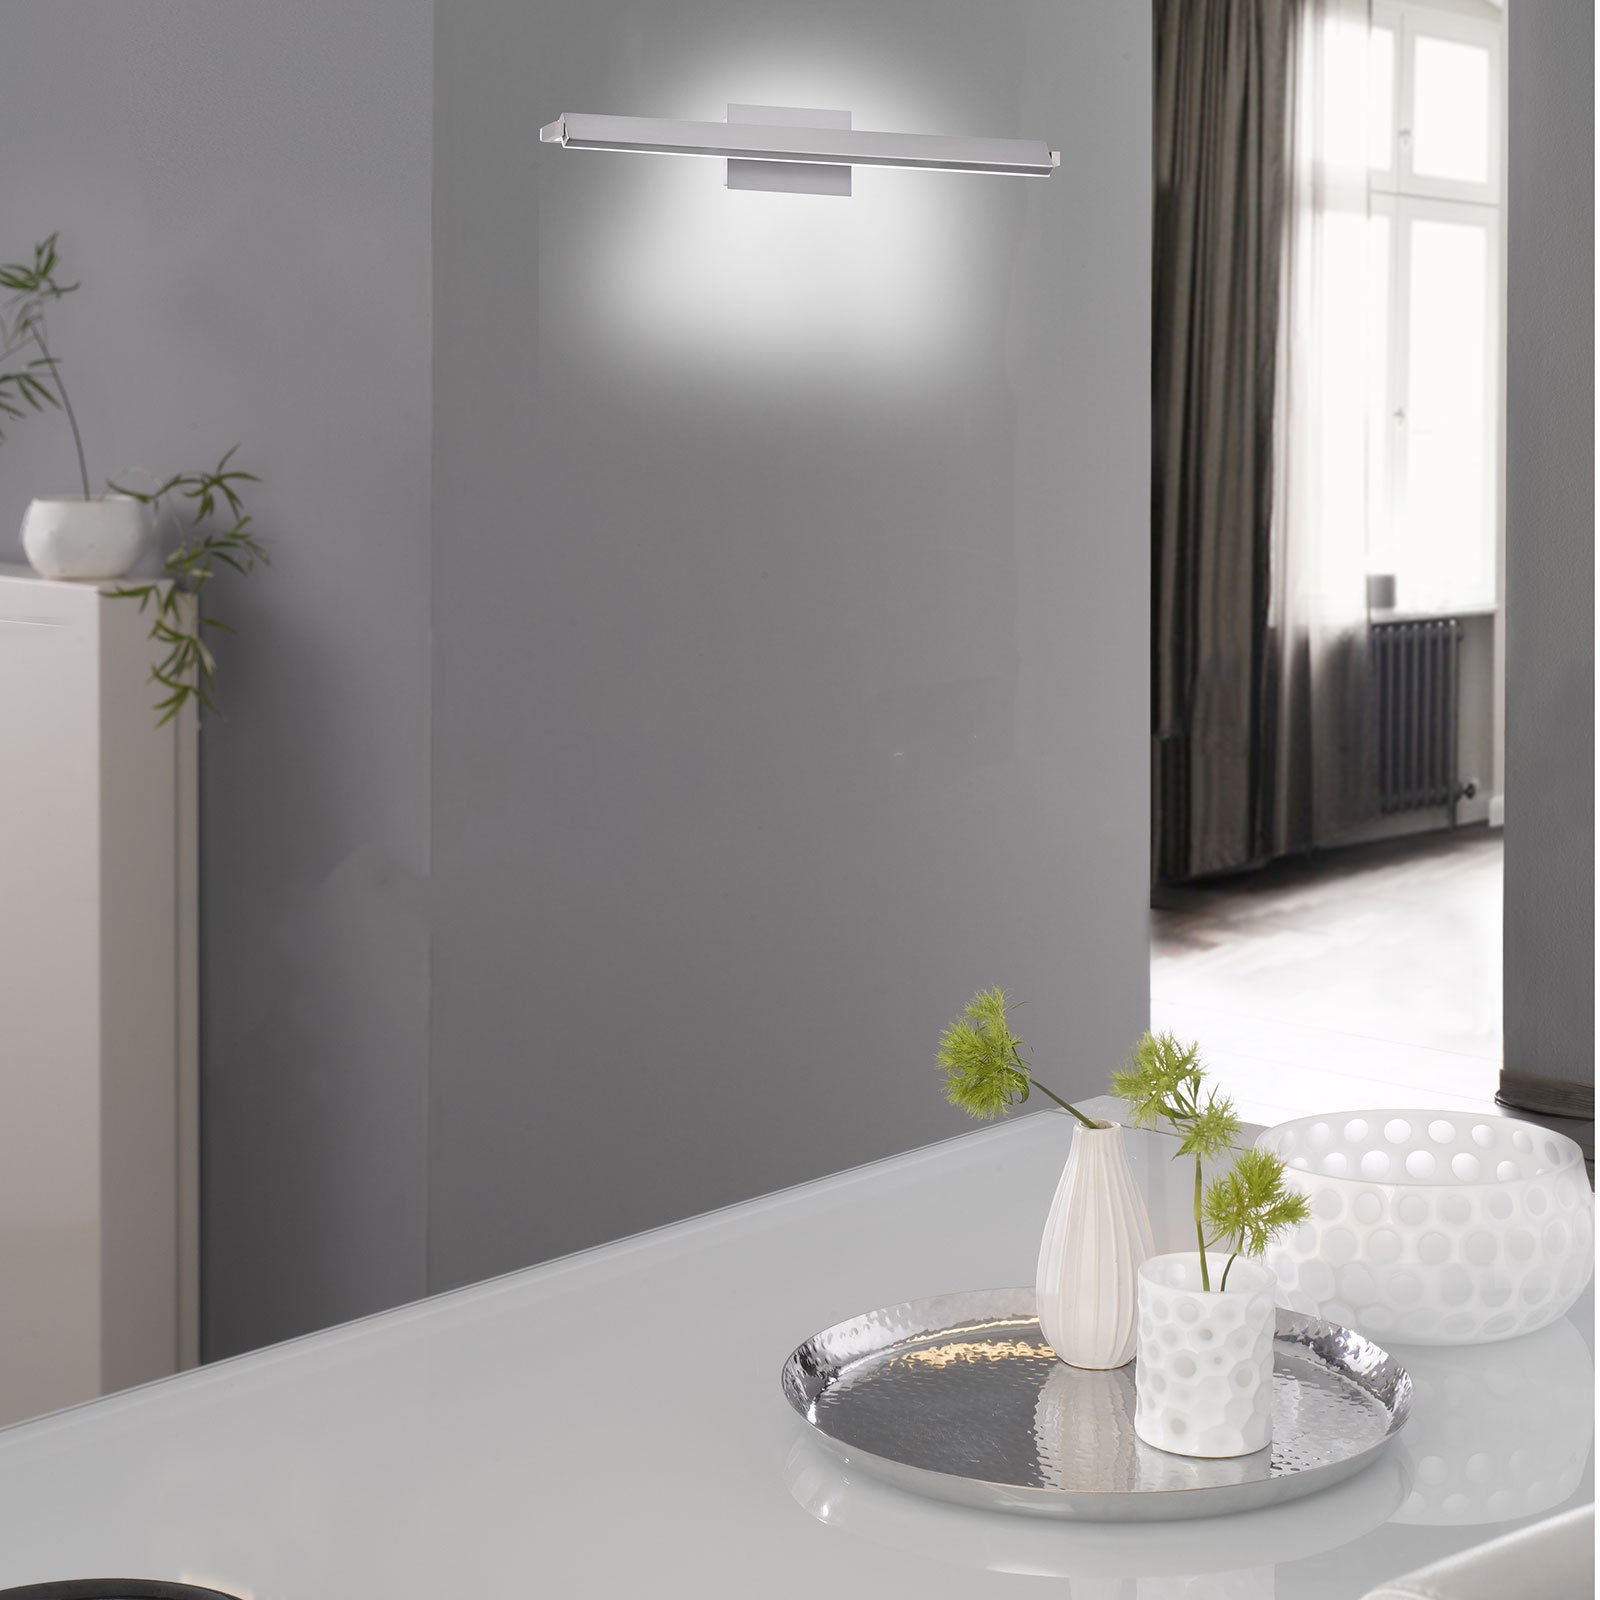 LED wandlamp Pare TW, dimmer, 3 lichtkleuren 60cm